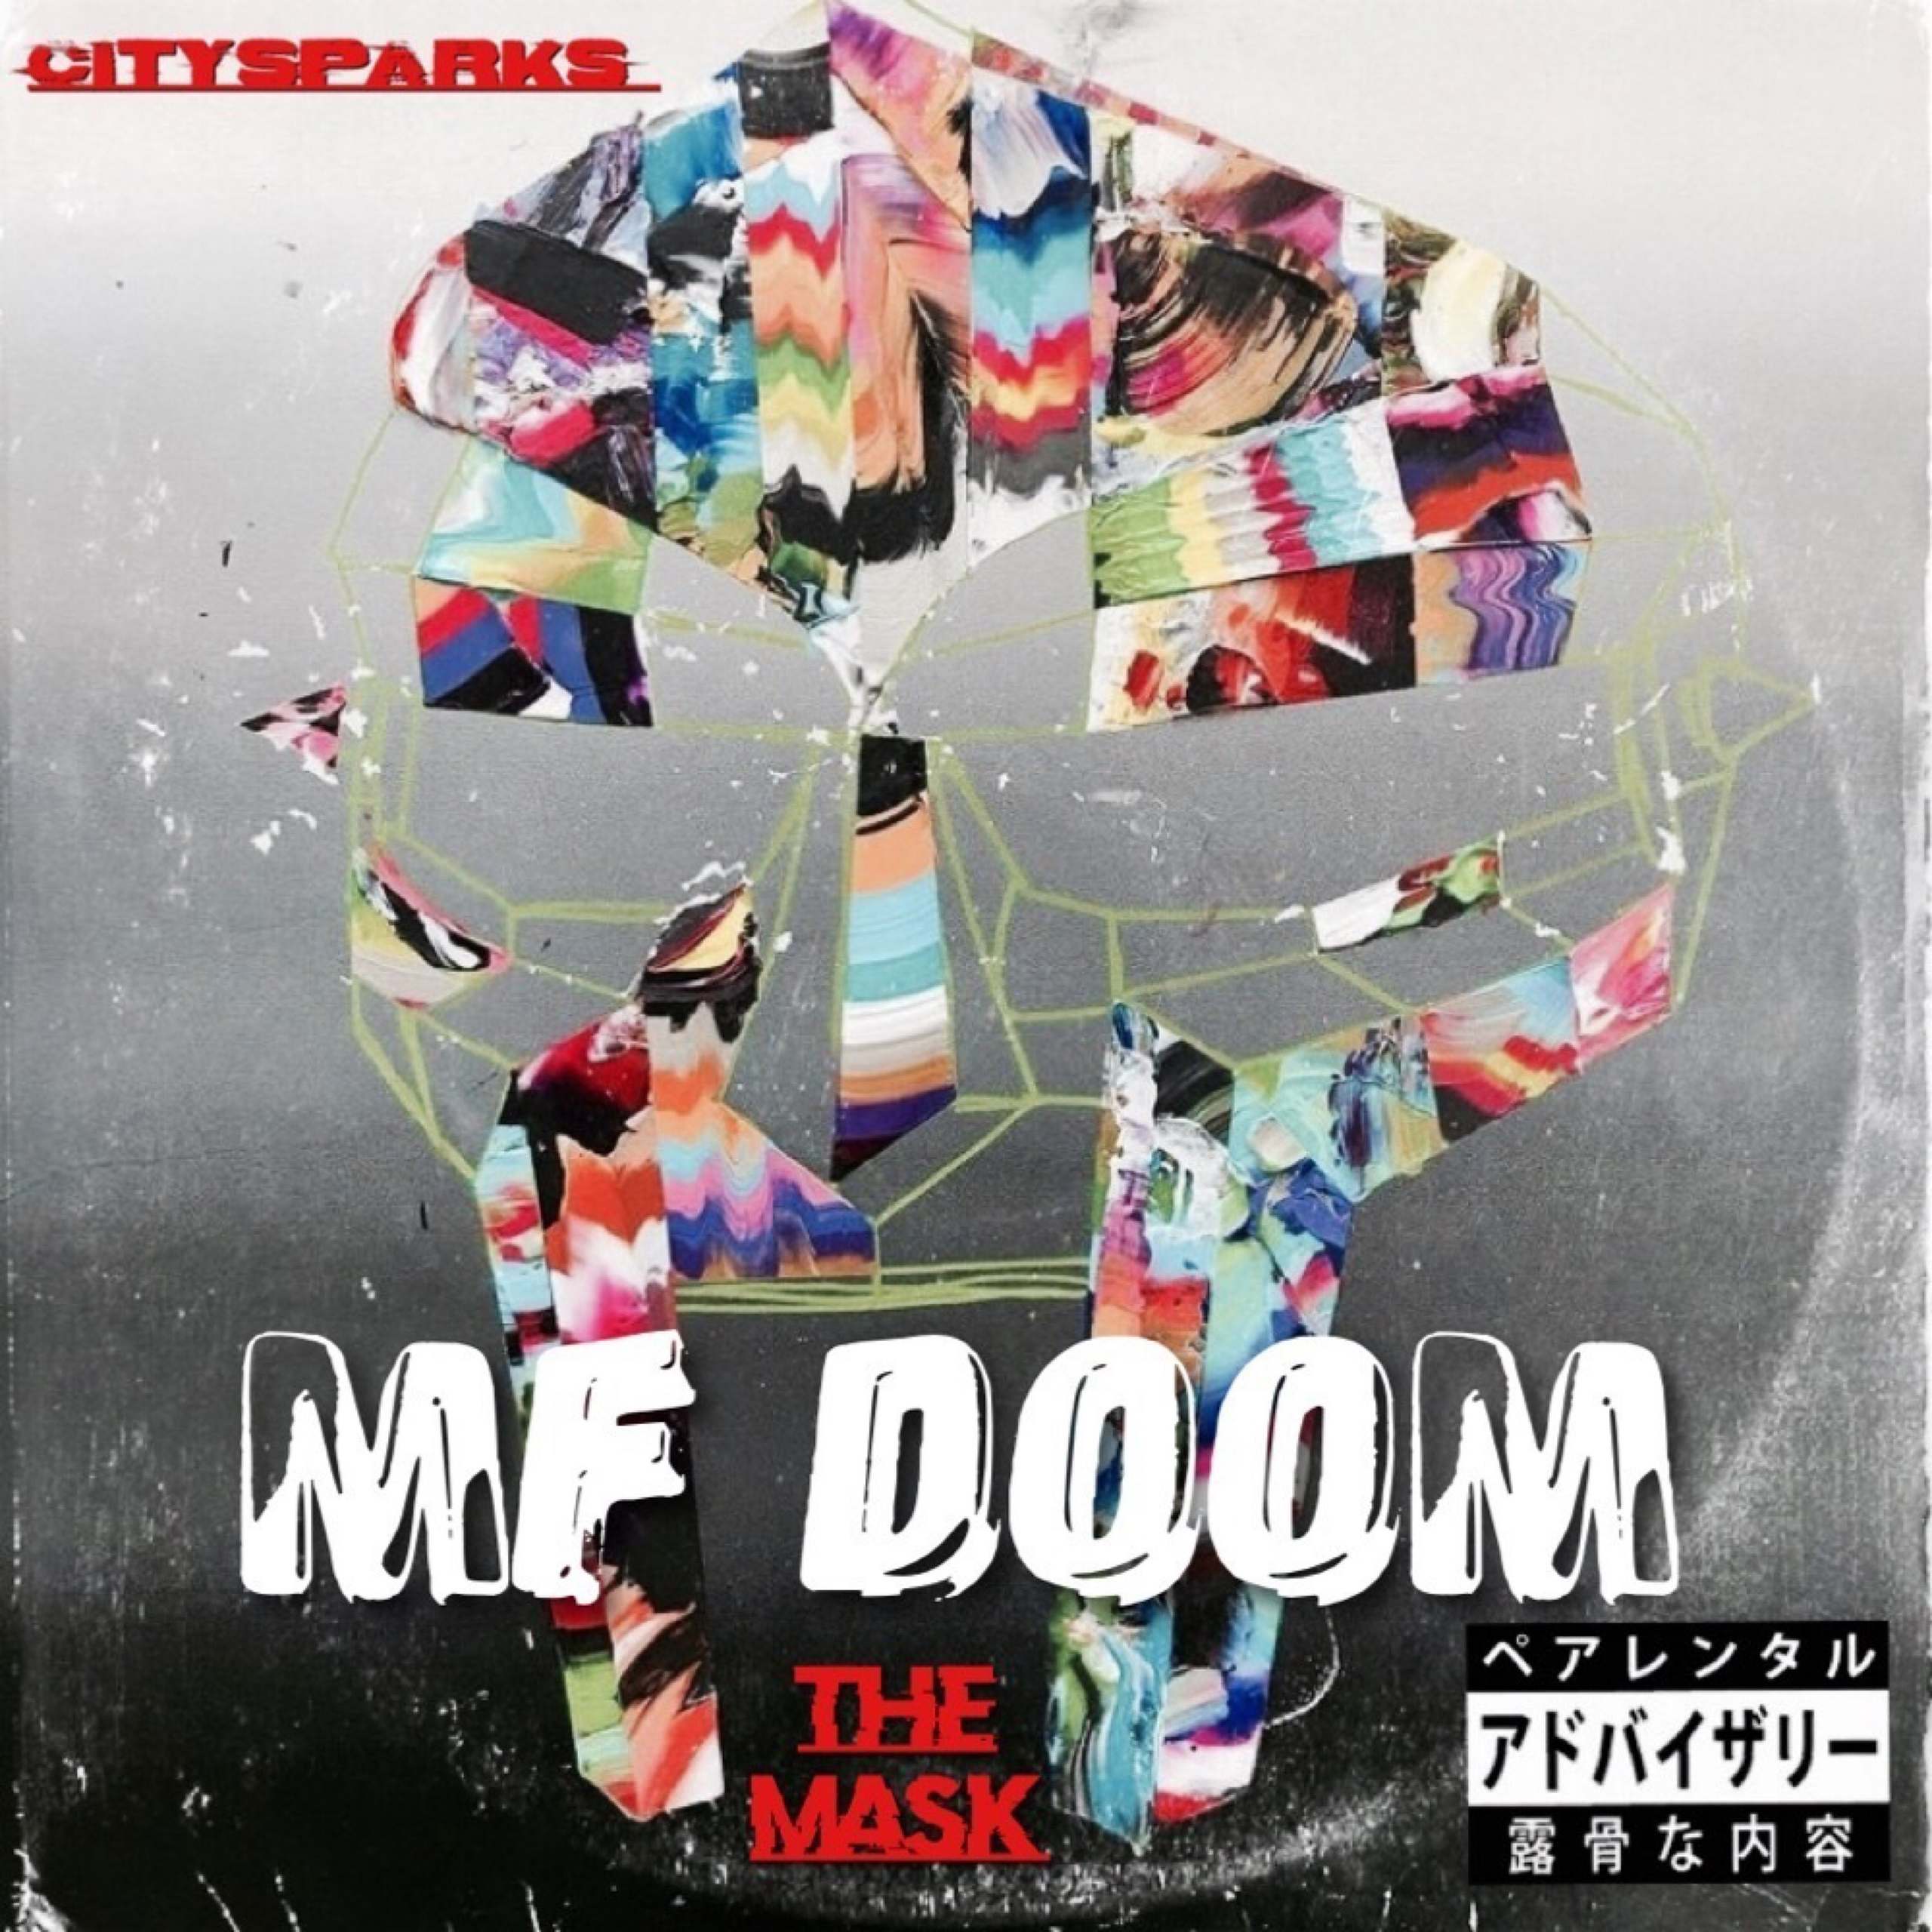 MP3: CITYSPARKS - MF DOOM (The Mask)